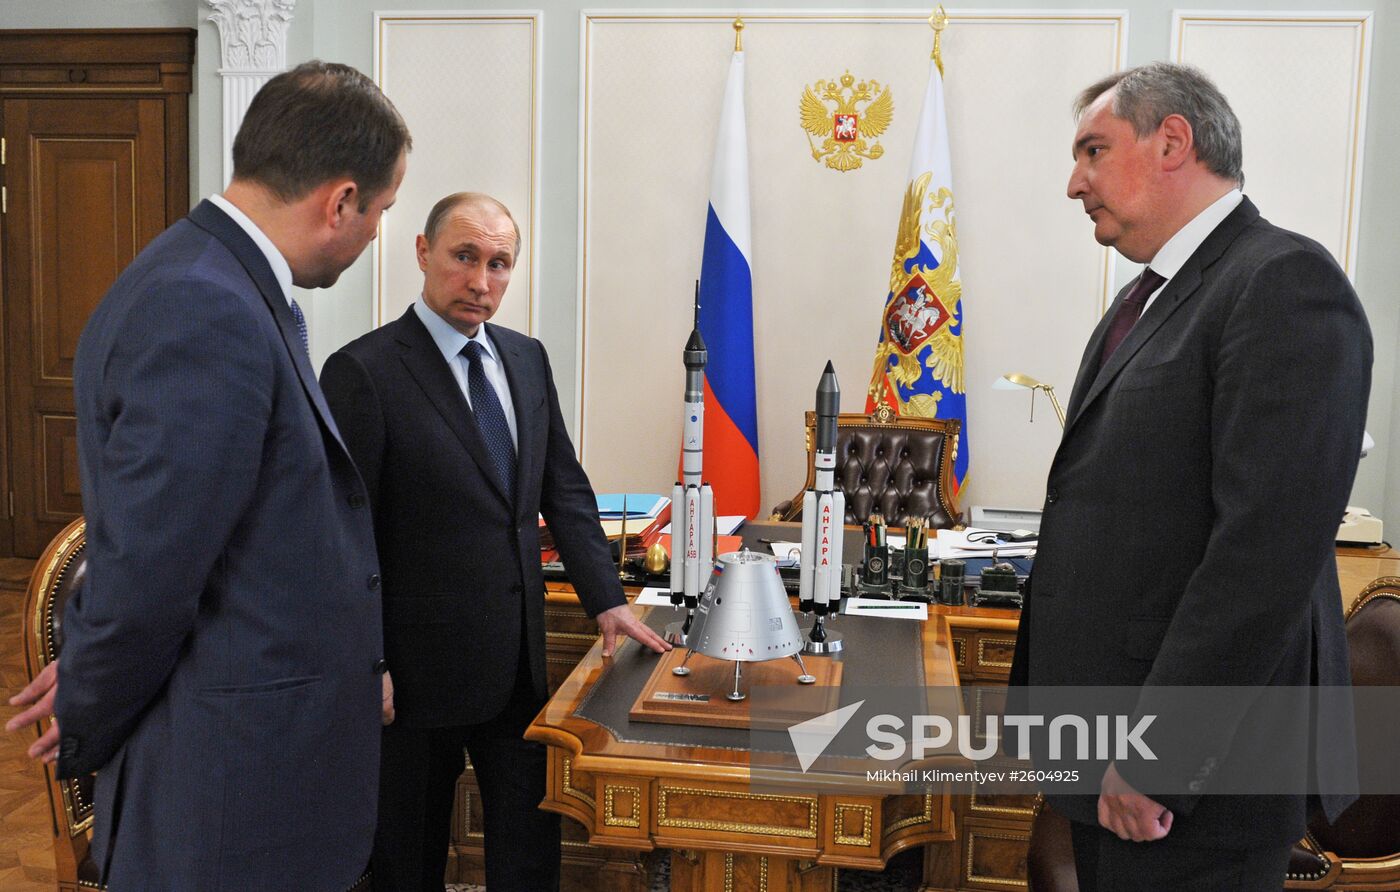 President Vladimir Putin meets with Deputy Prime Minister Dmitry Rogozin and Roscosmos Head Igor Komarov